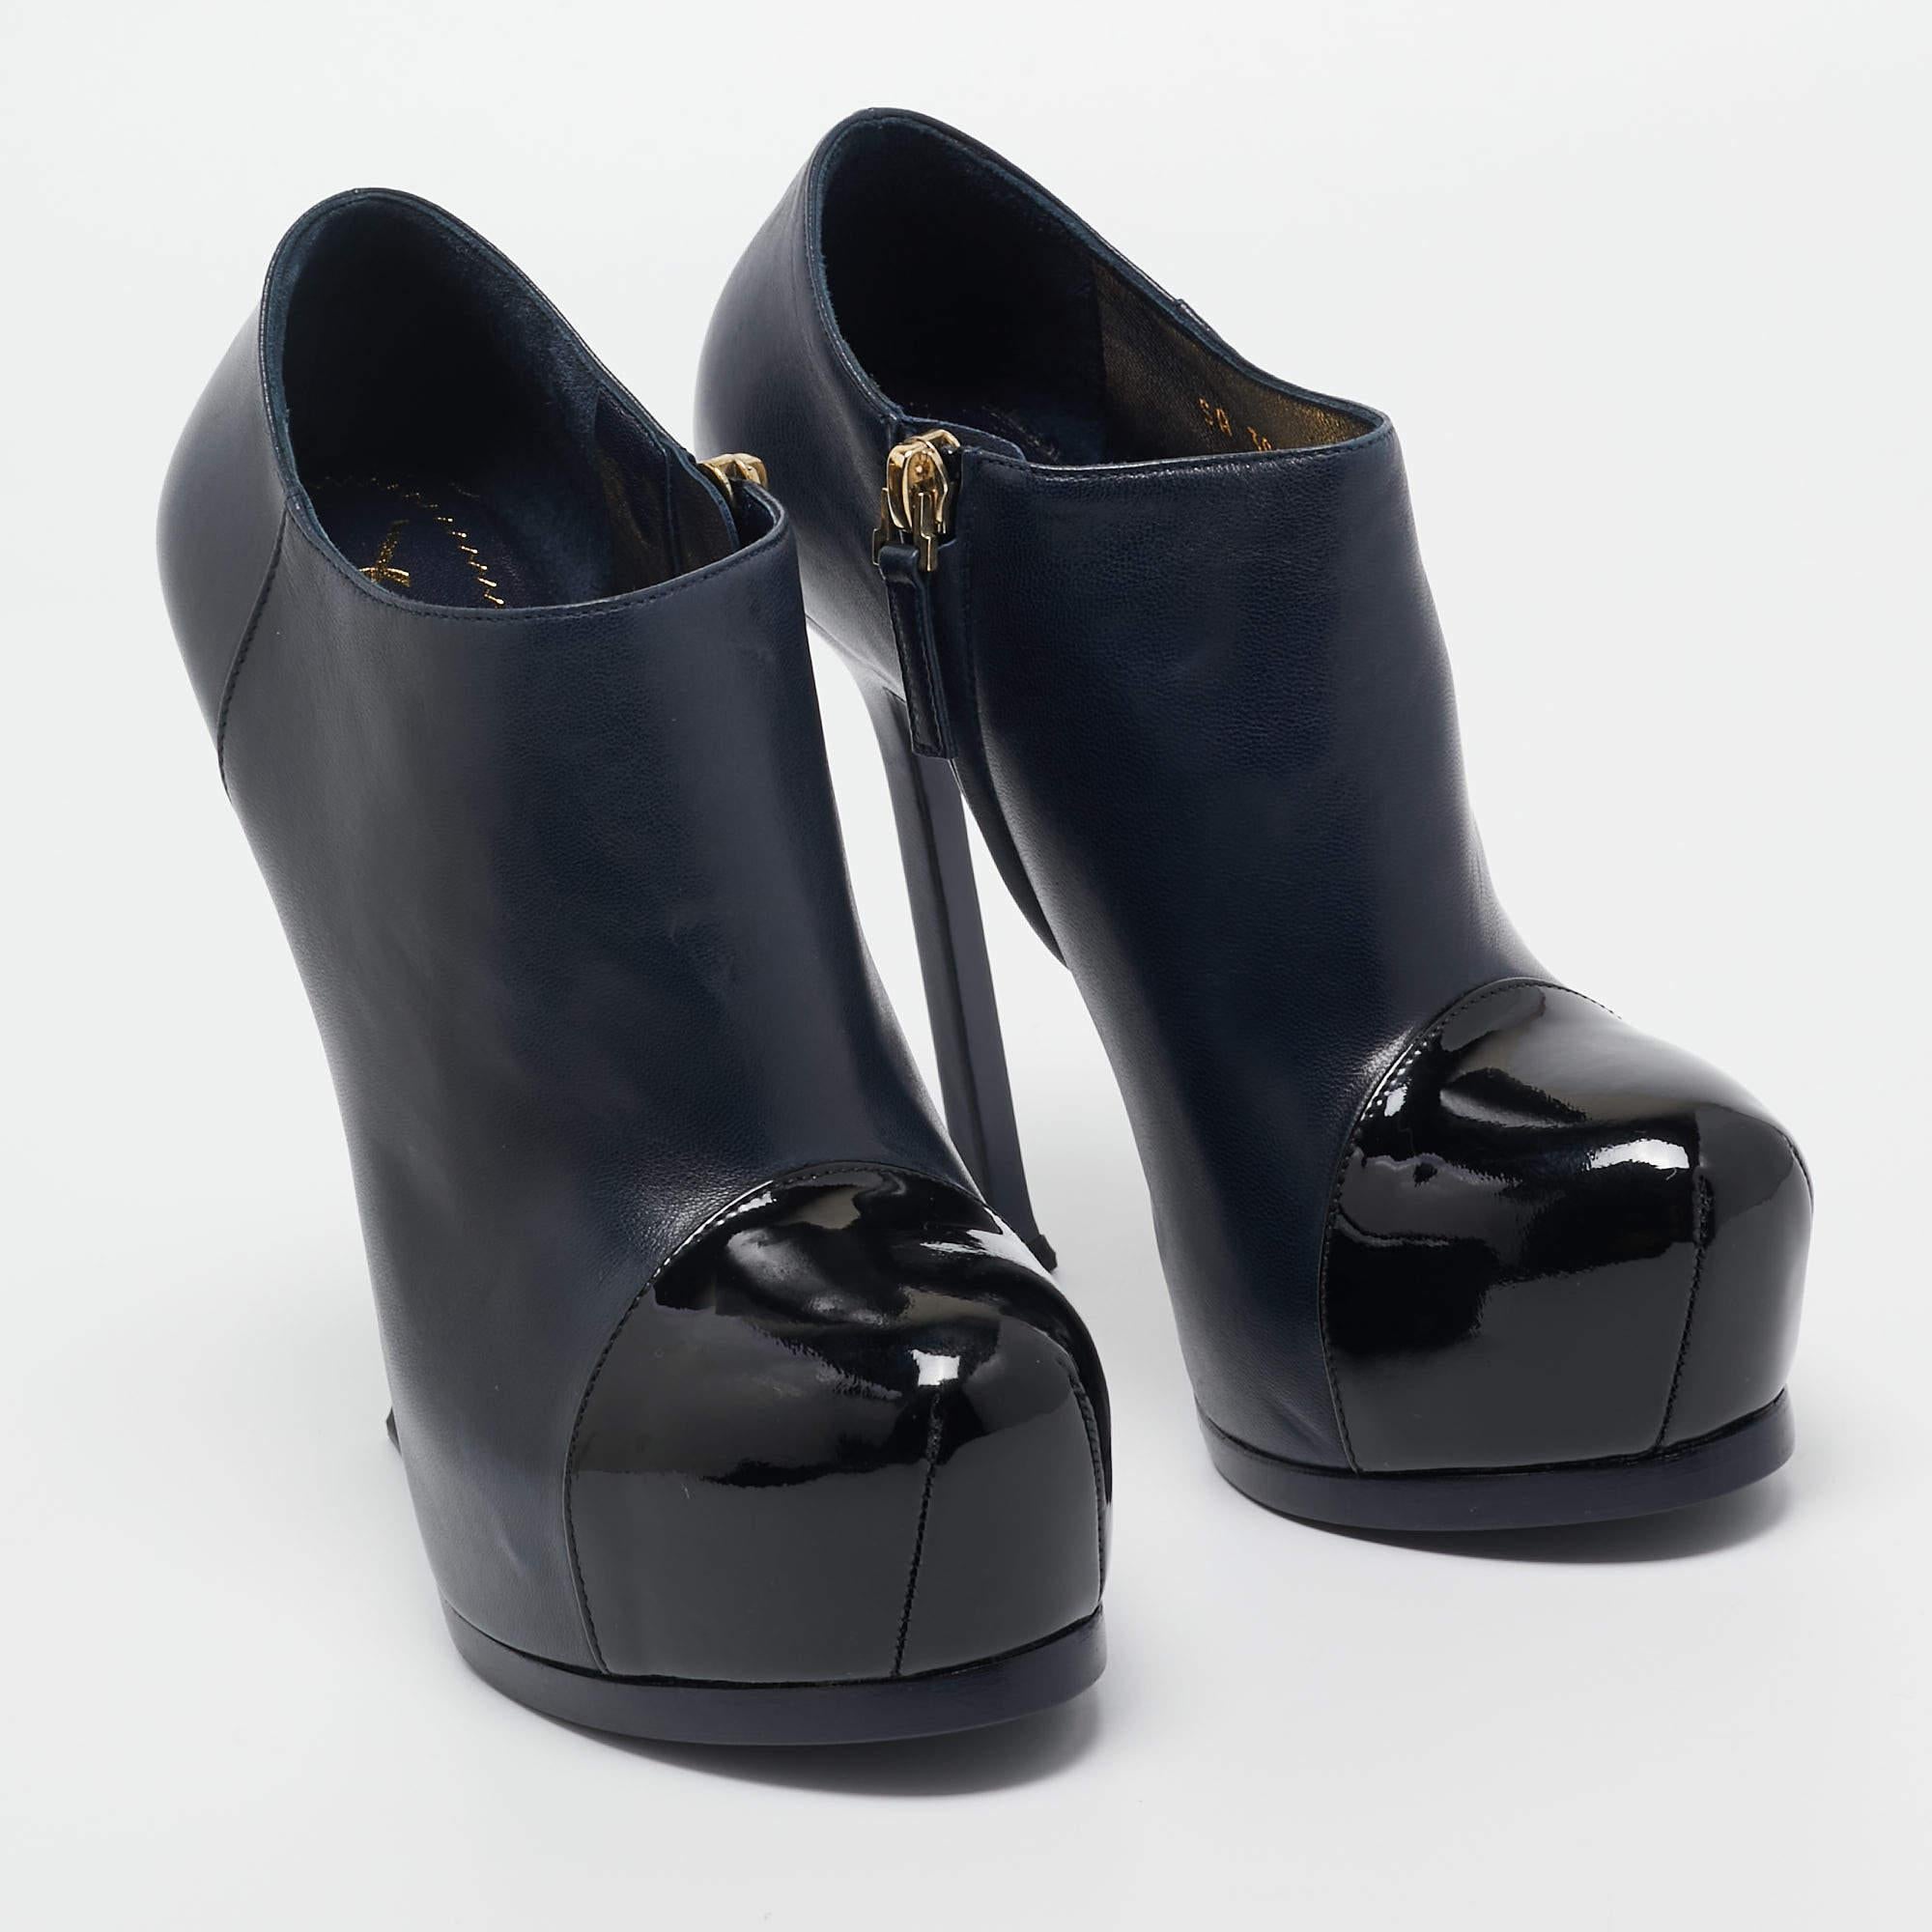 Yves Saint Laurent Patent Leather Tribute Platform Ankle Boots Size 36 For Sale 1